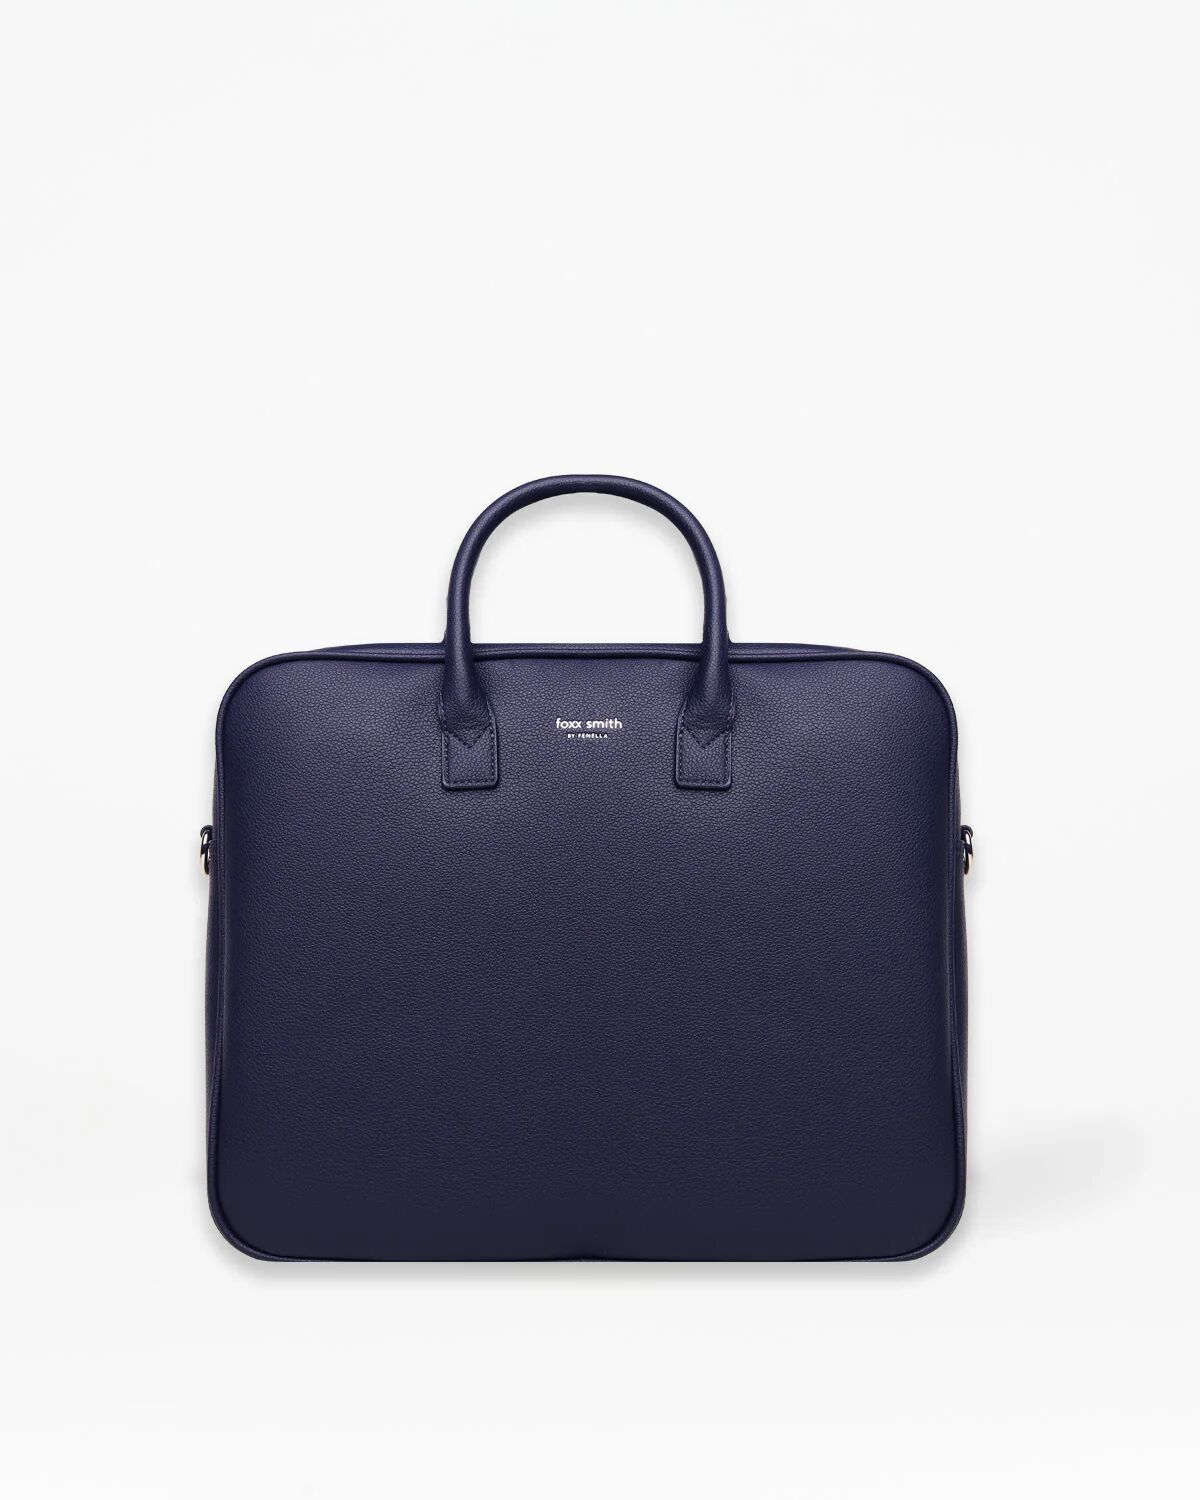 Foxx Navy Slim Laptop Bag Vegan Leather Stylish Commute Bag Fits Laptop, Papers & Daily Essentials Fenella Smith Unisex